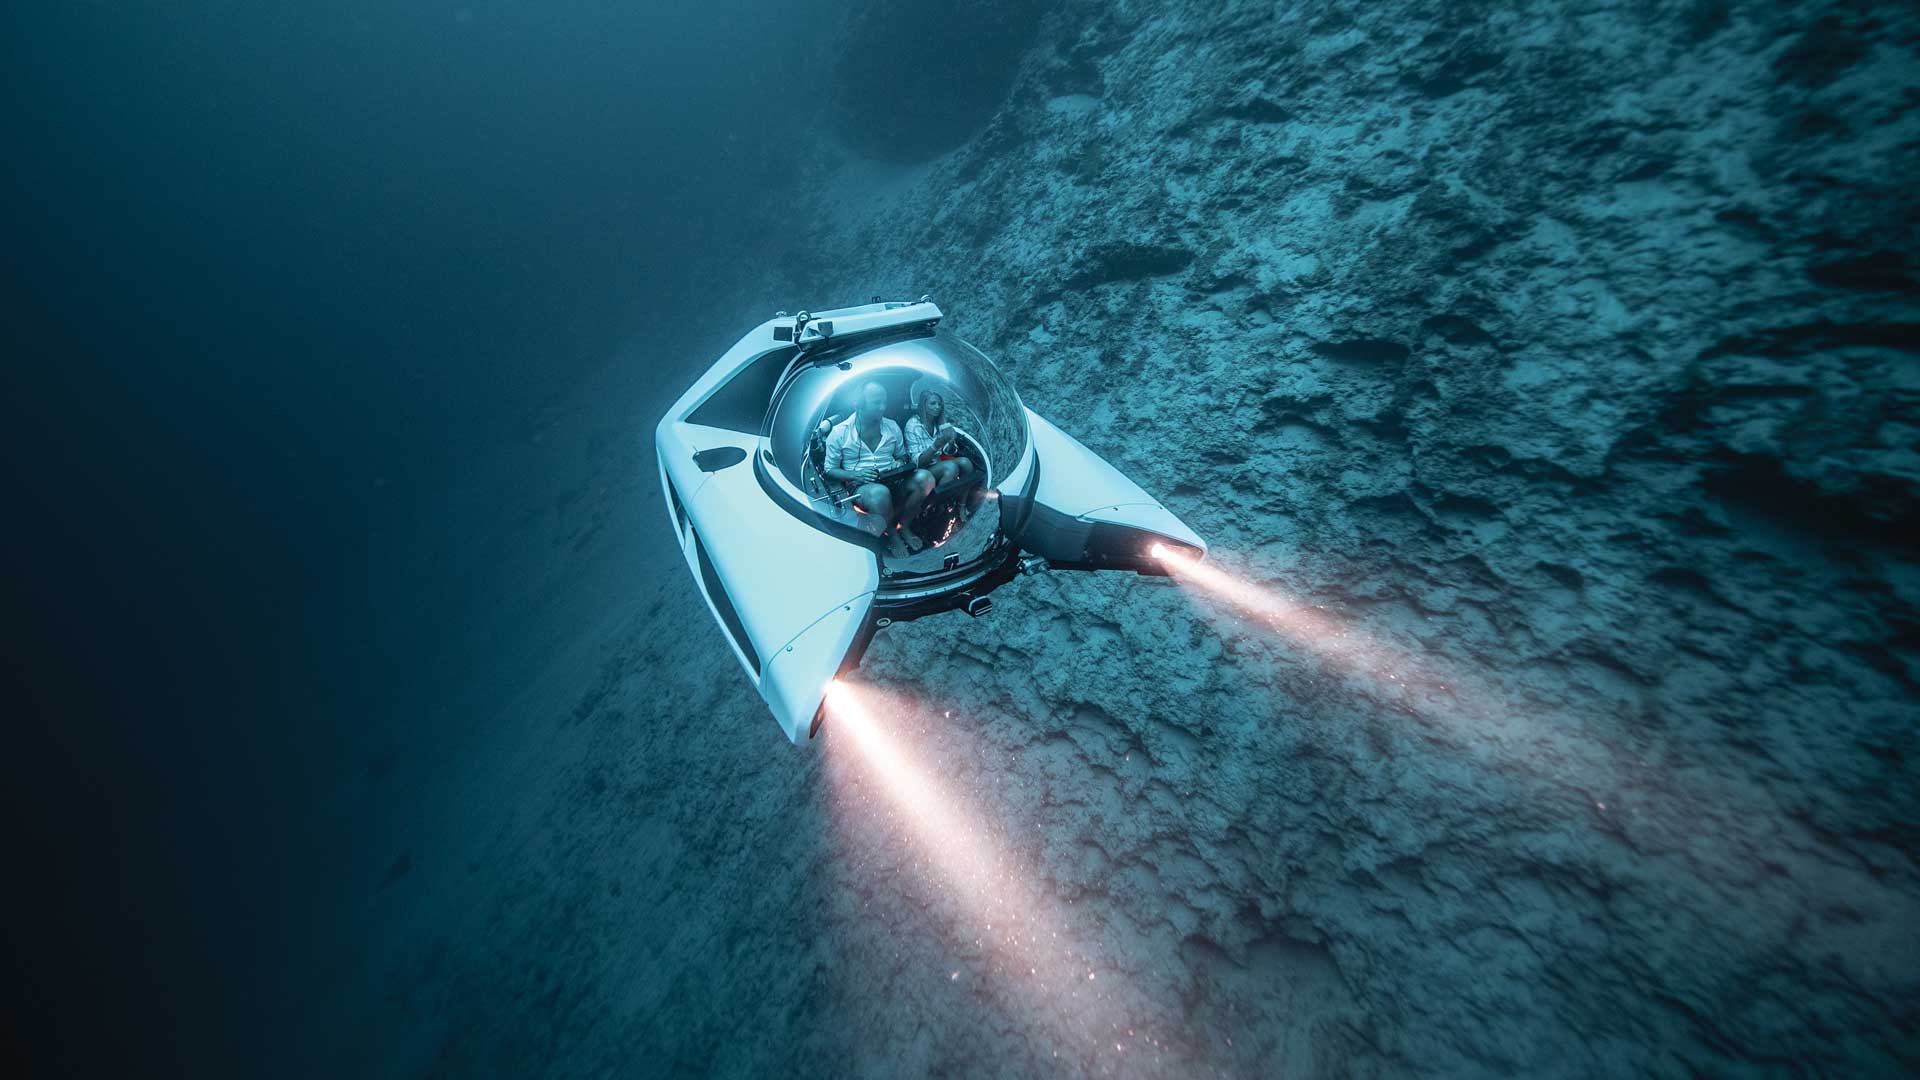 sottomarino-nemo-2-robb-report-italia